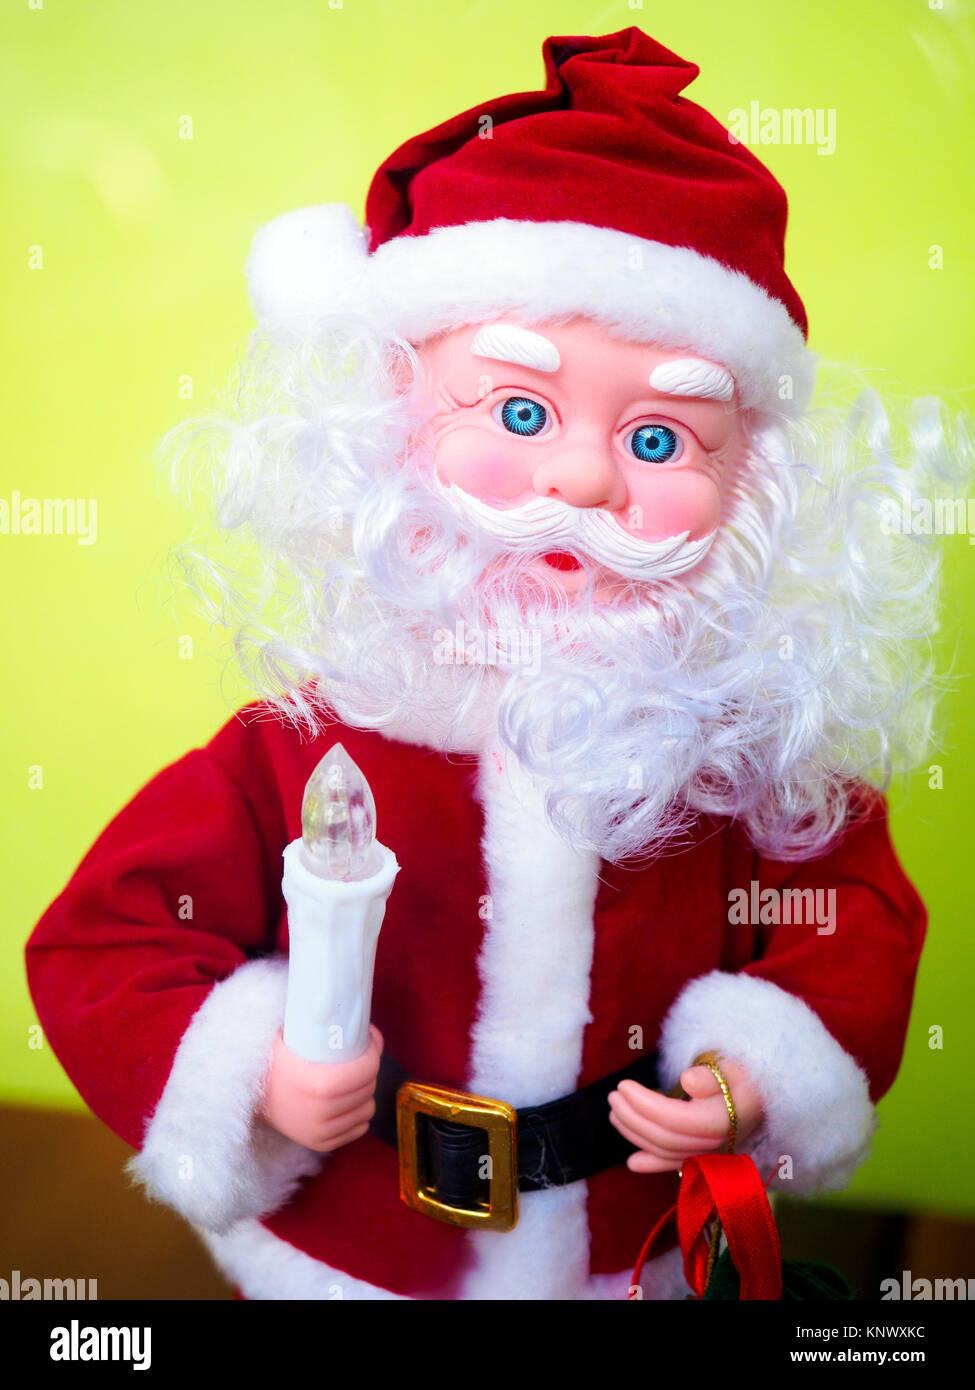 A Santa Claus doll Stock Photo